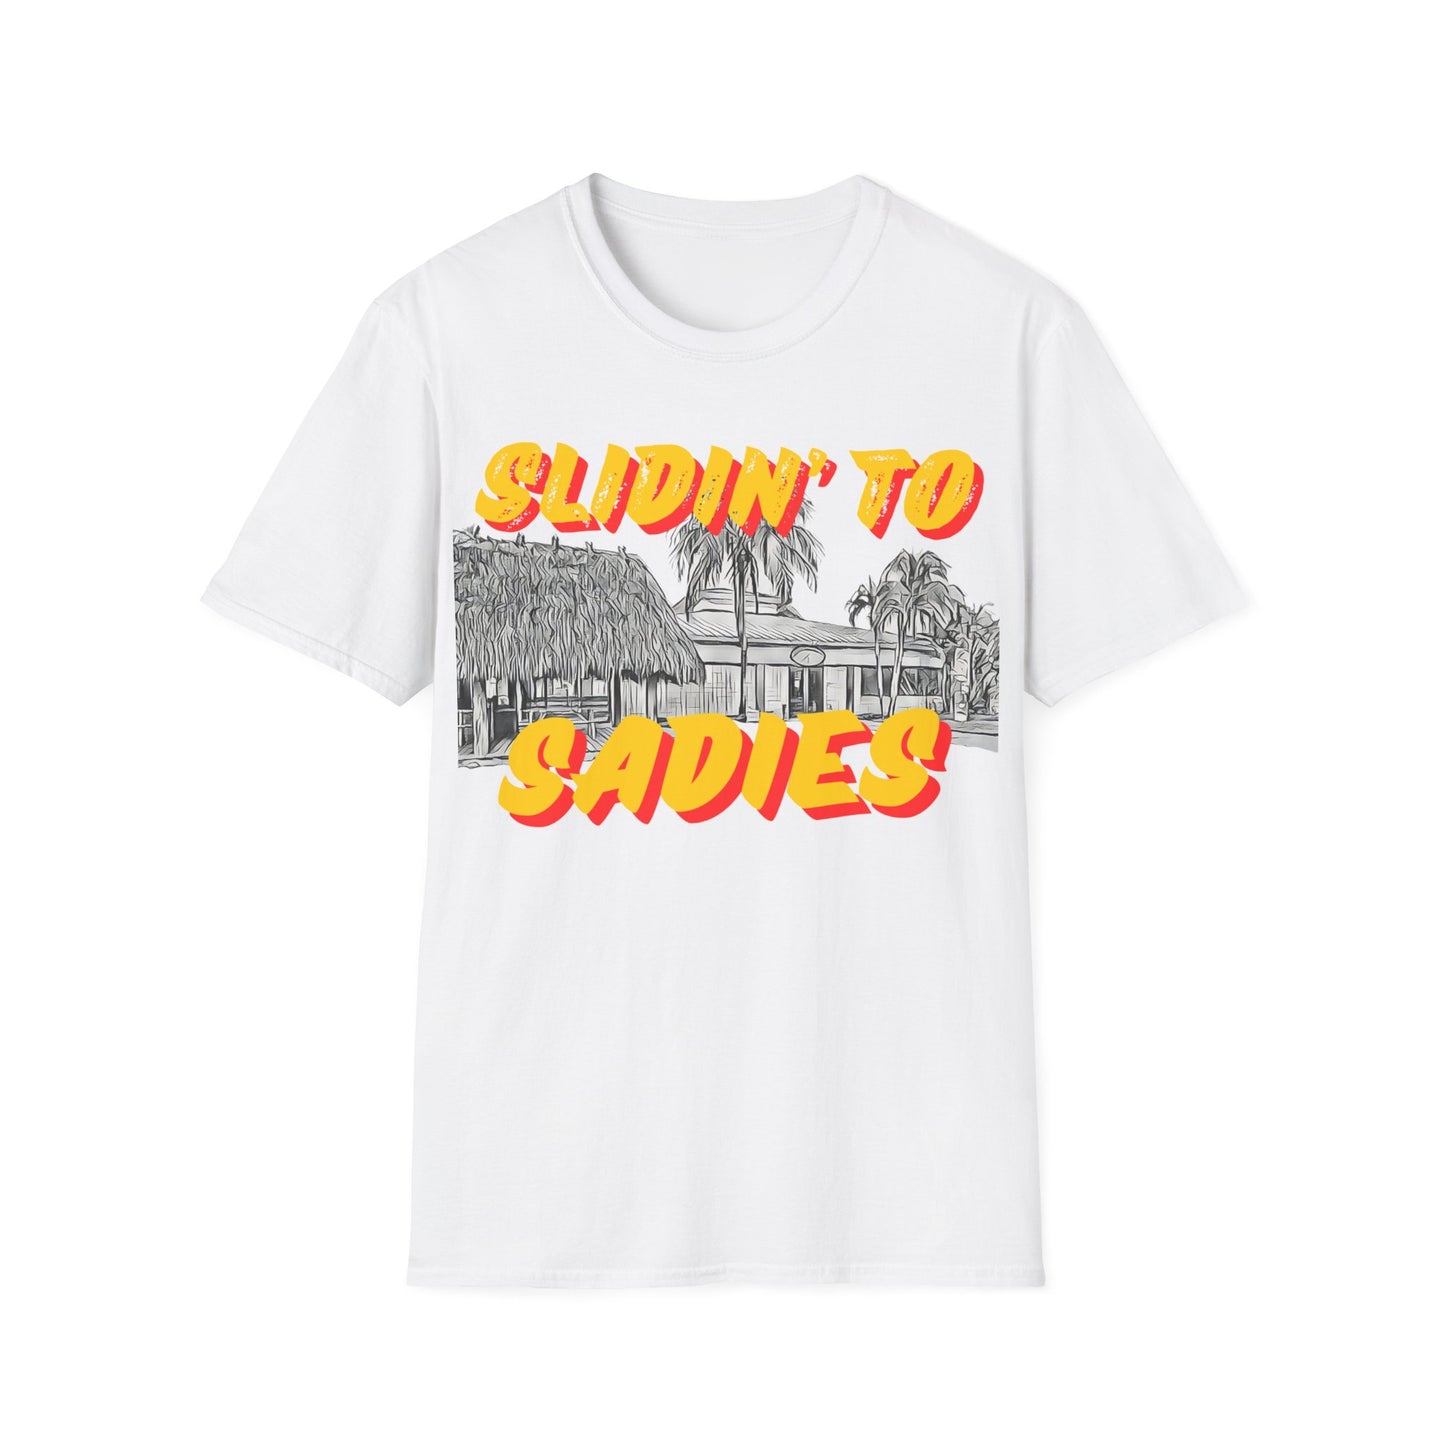 Slidin’ to Sadies T-Shirt